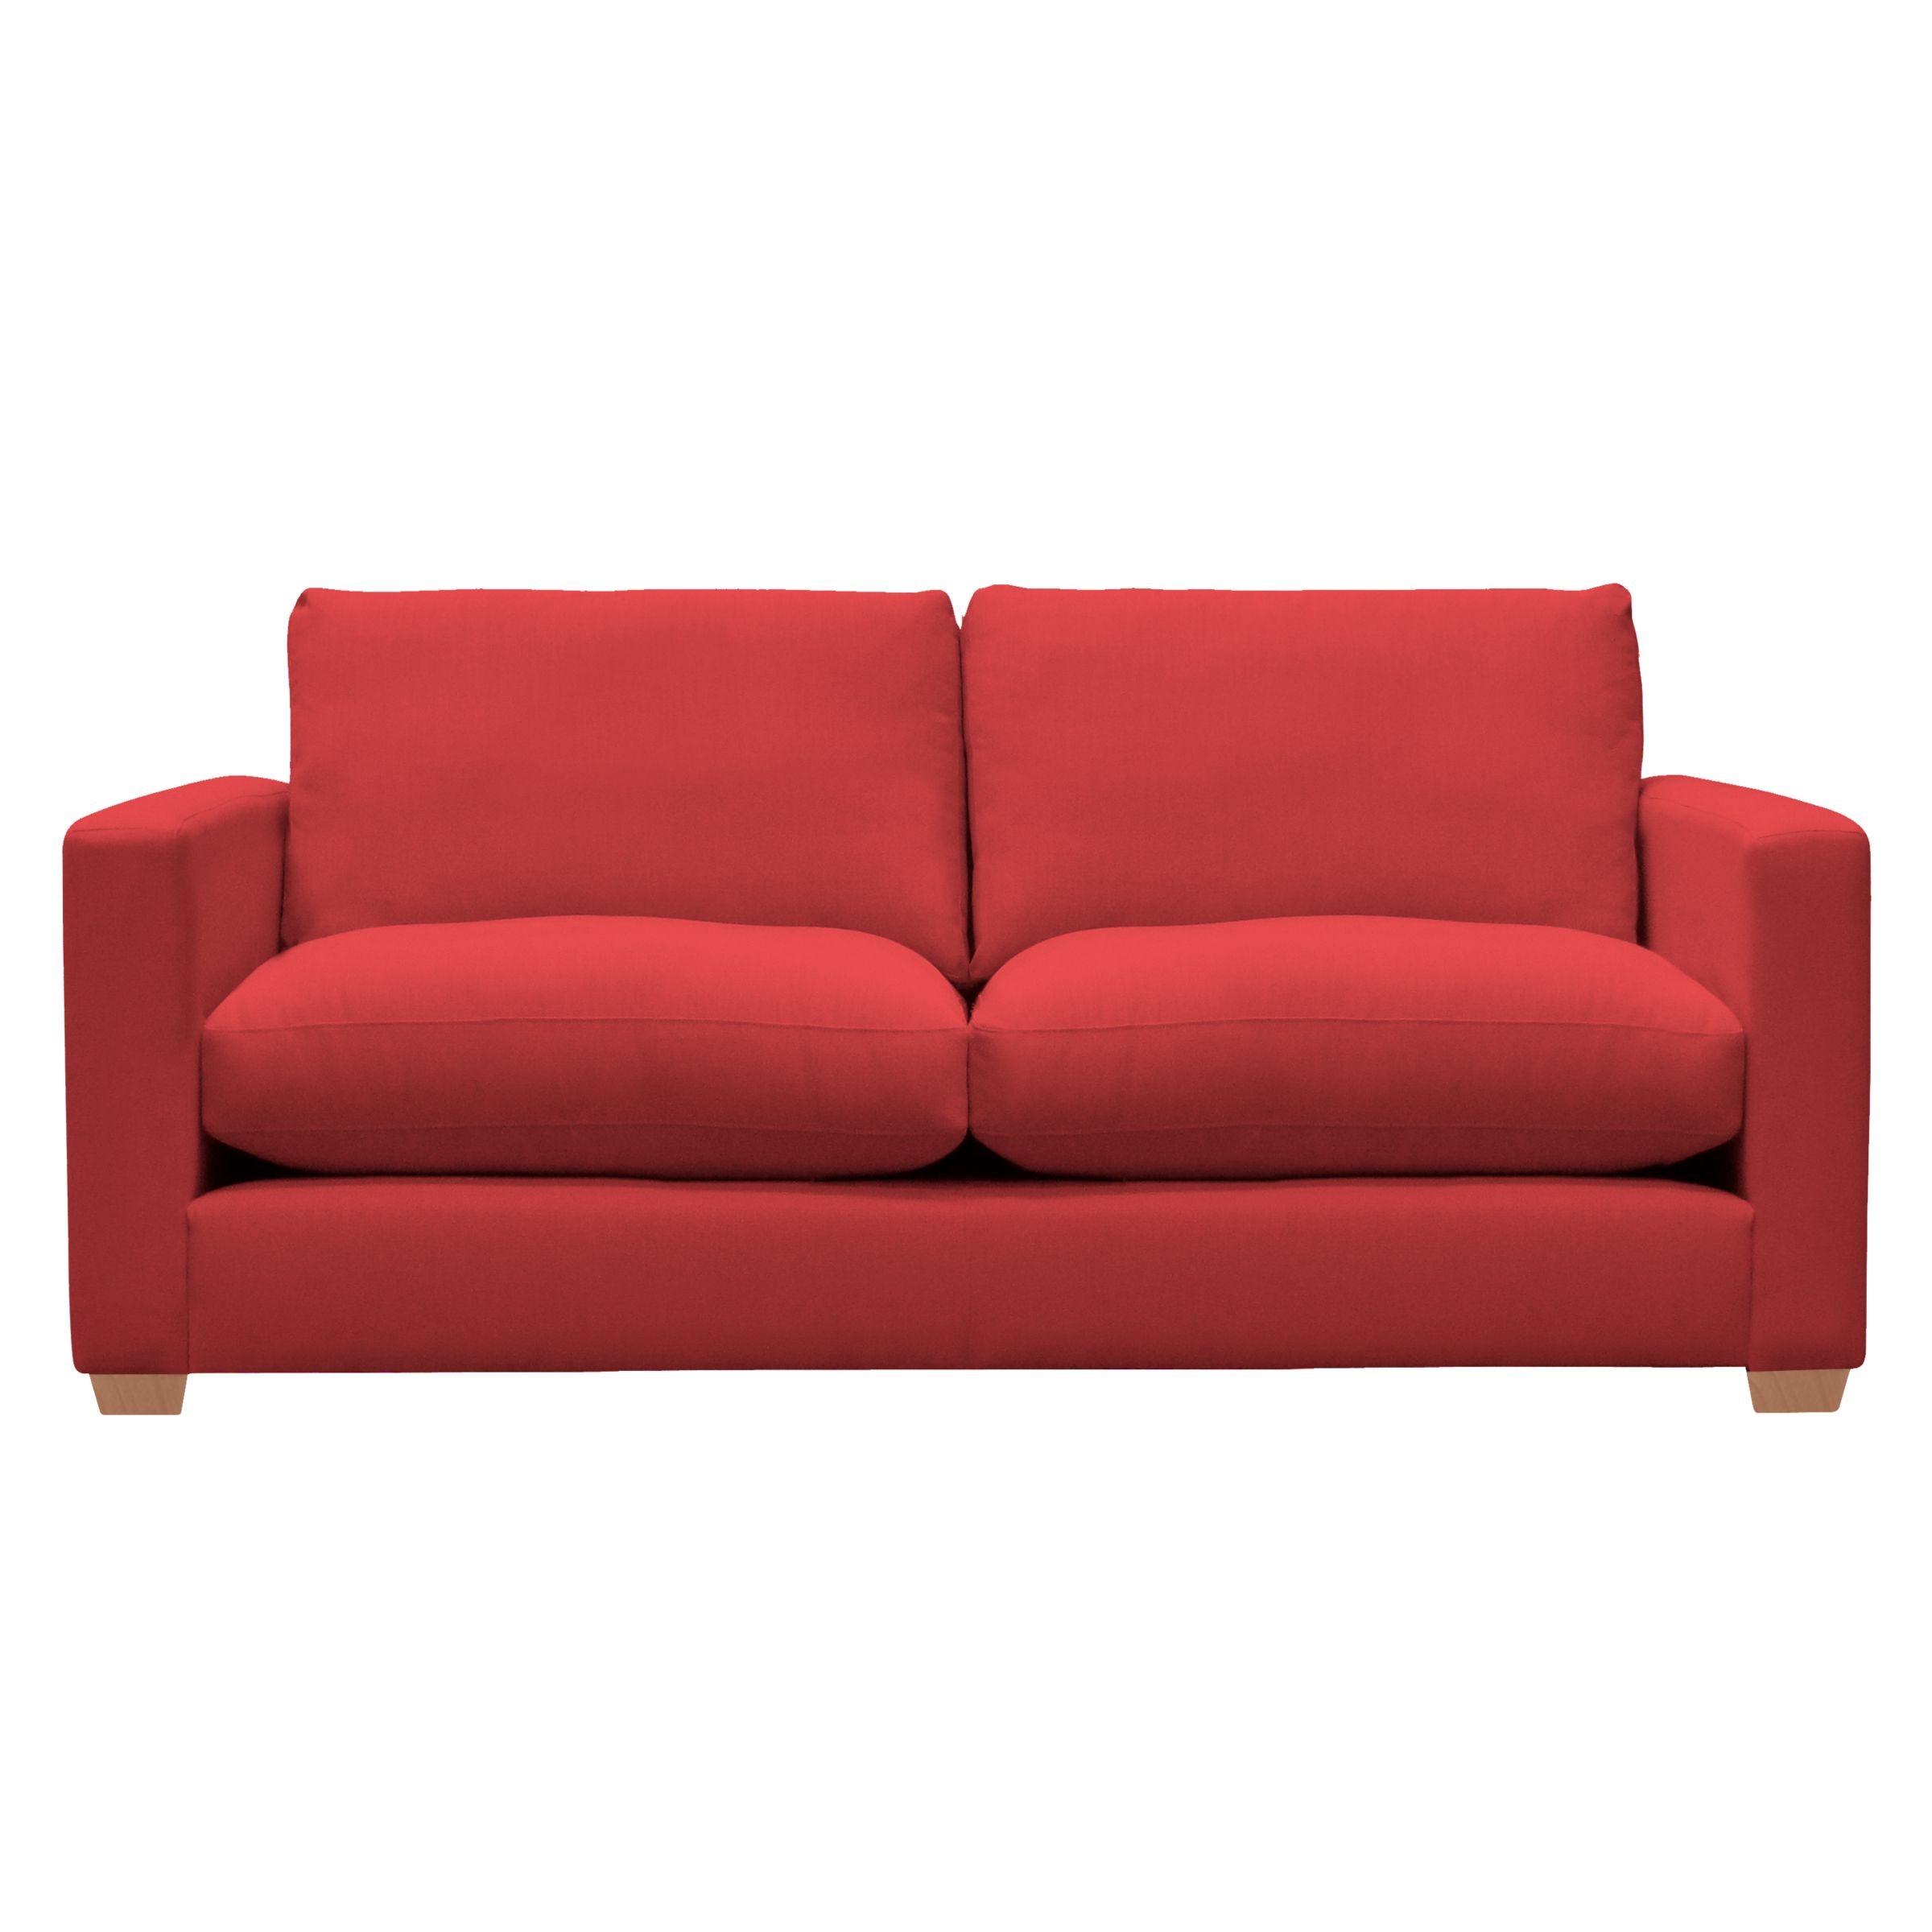 John Lewis Options Slim Arm Large Sofa, Linley Red, width 187cm